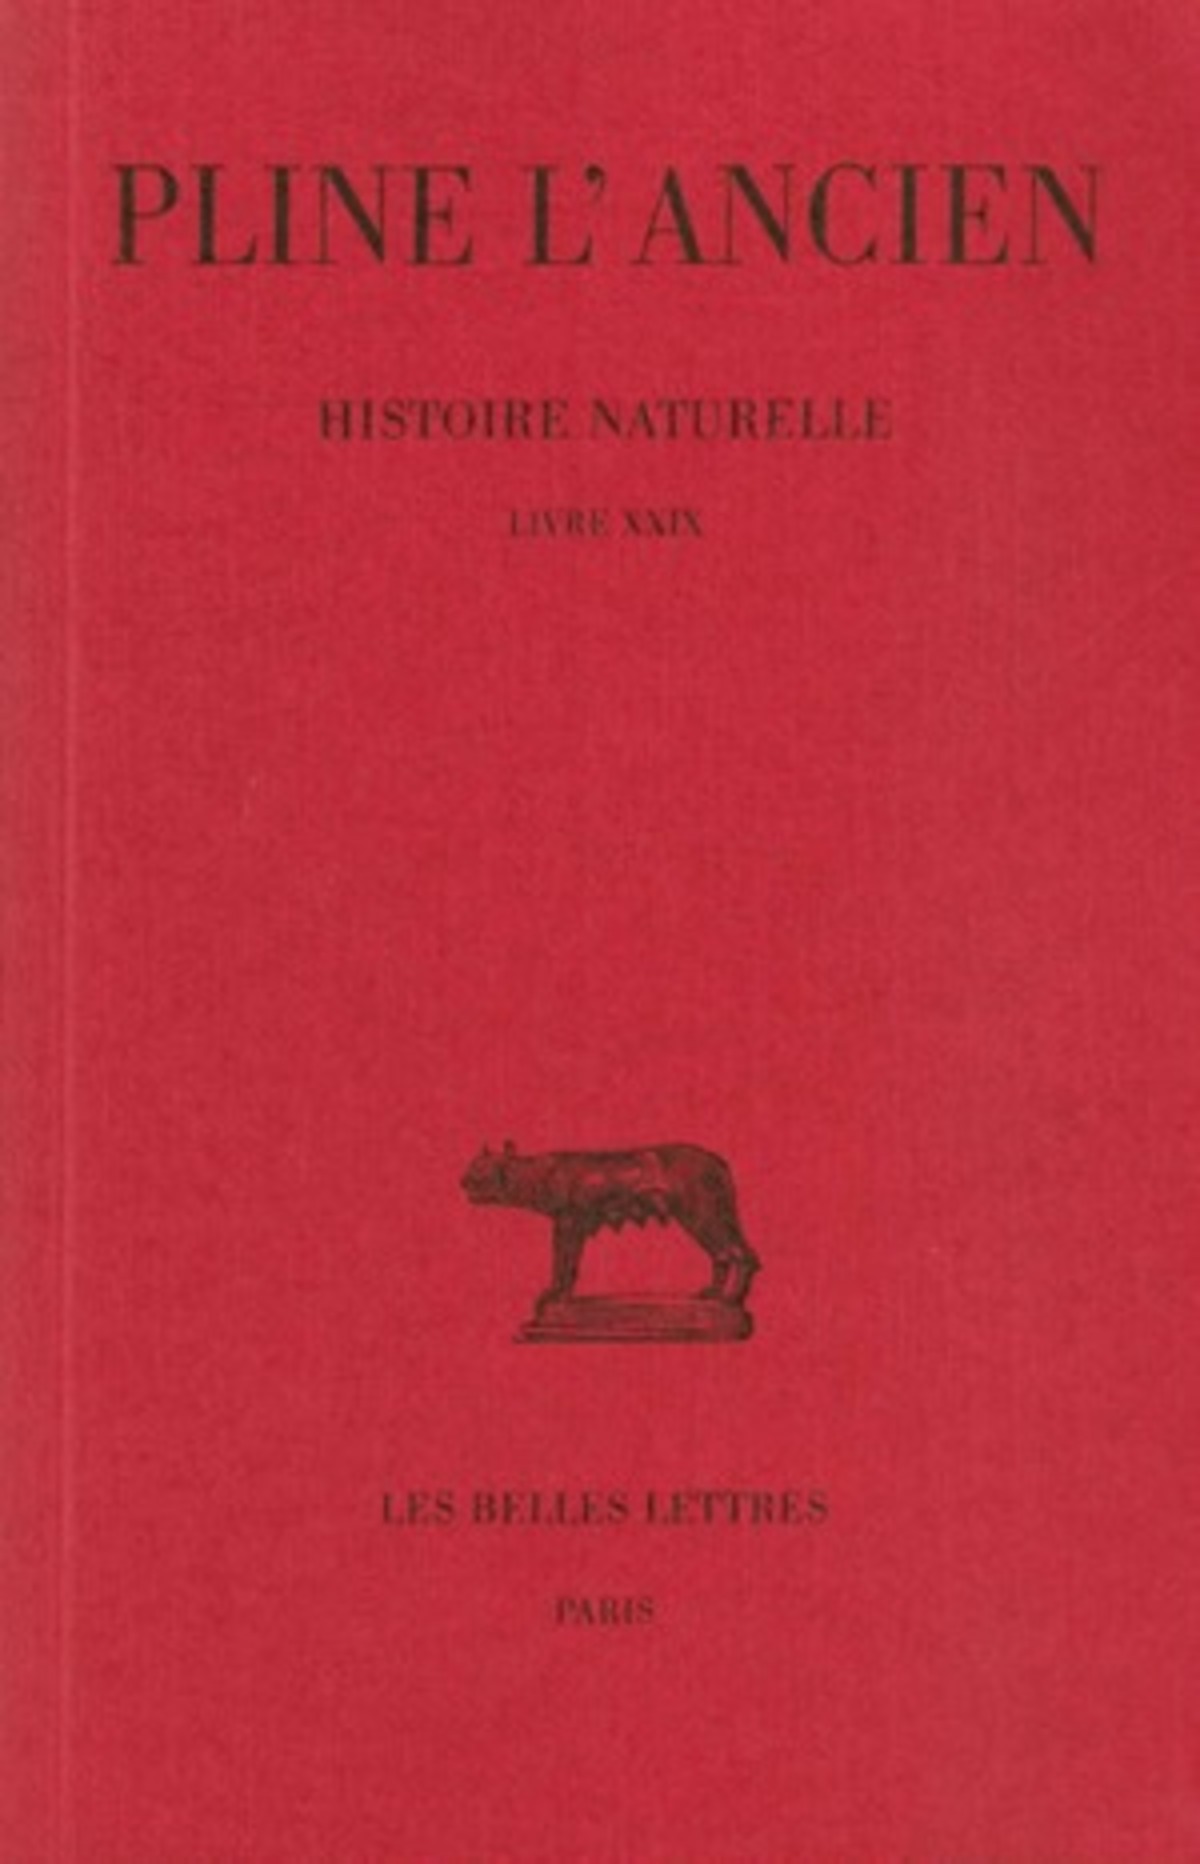 Histoire naturelle. Livre XXIX